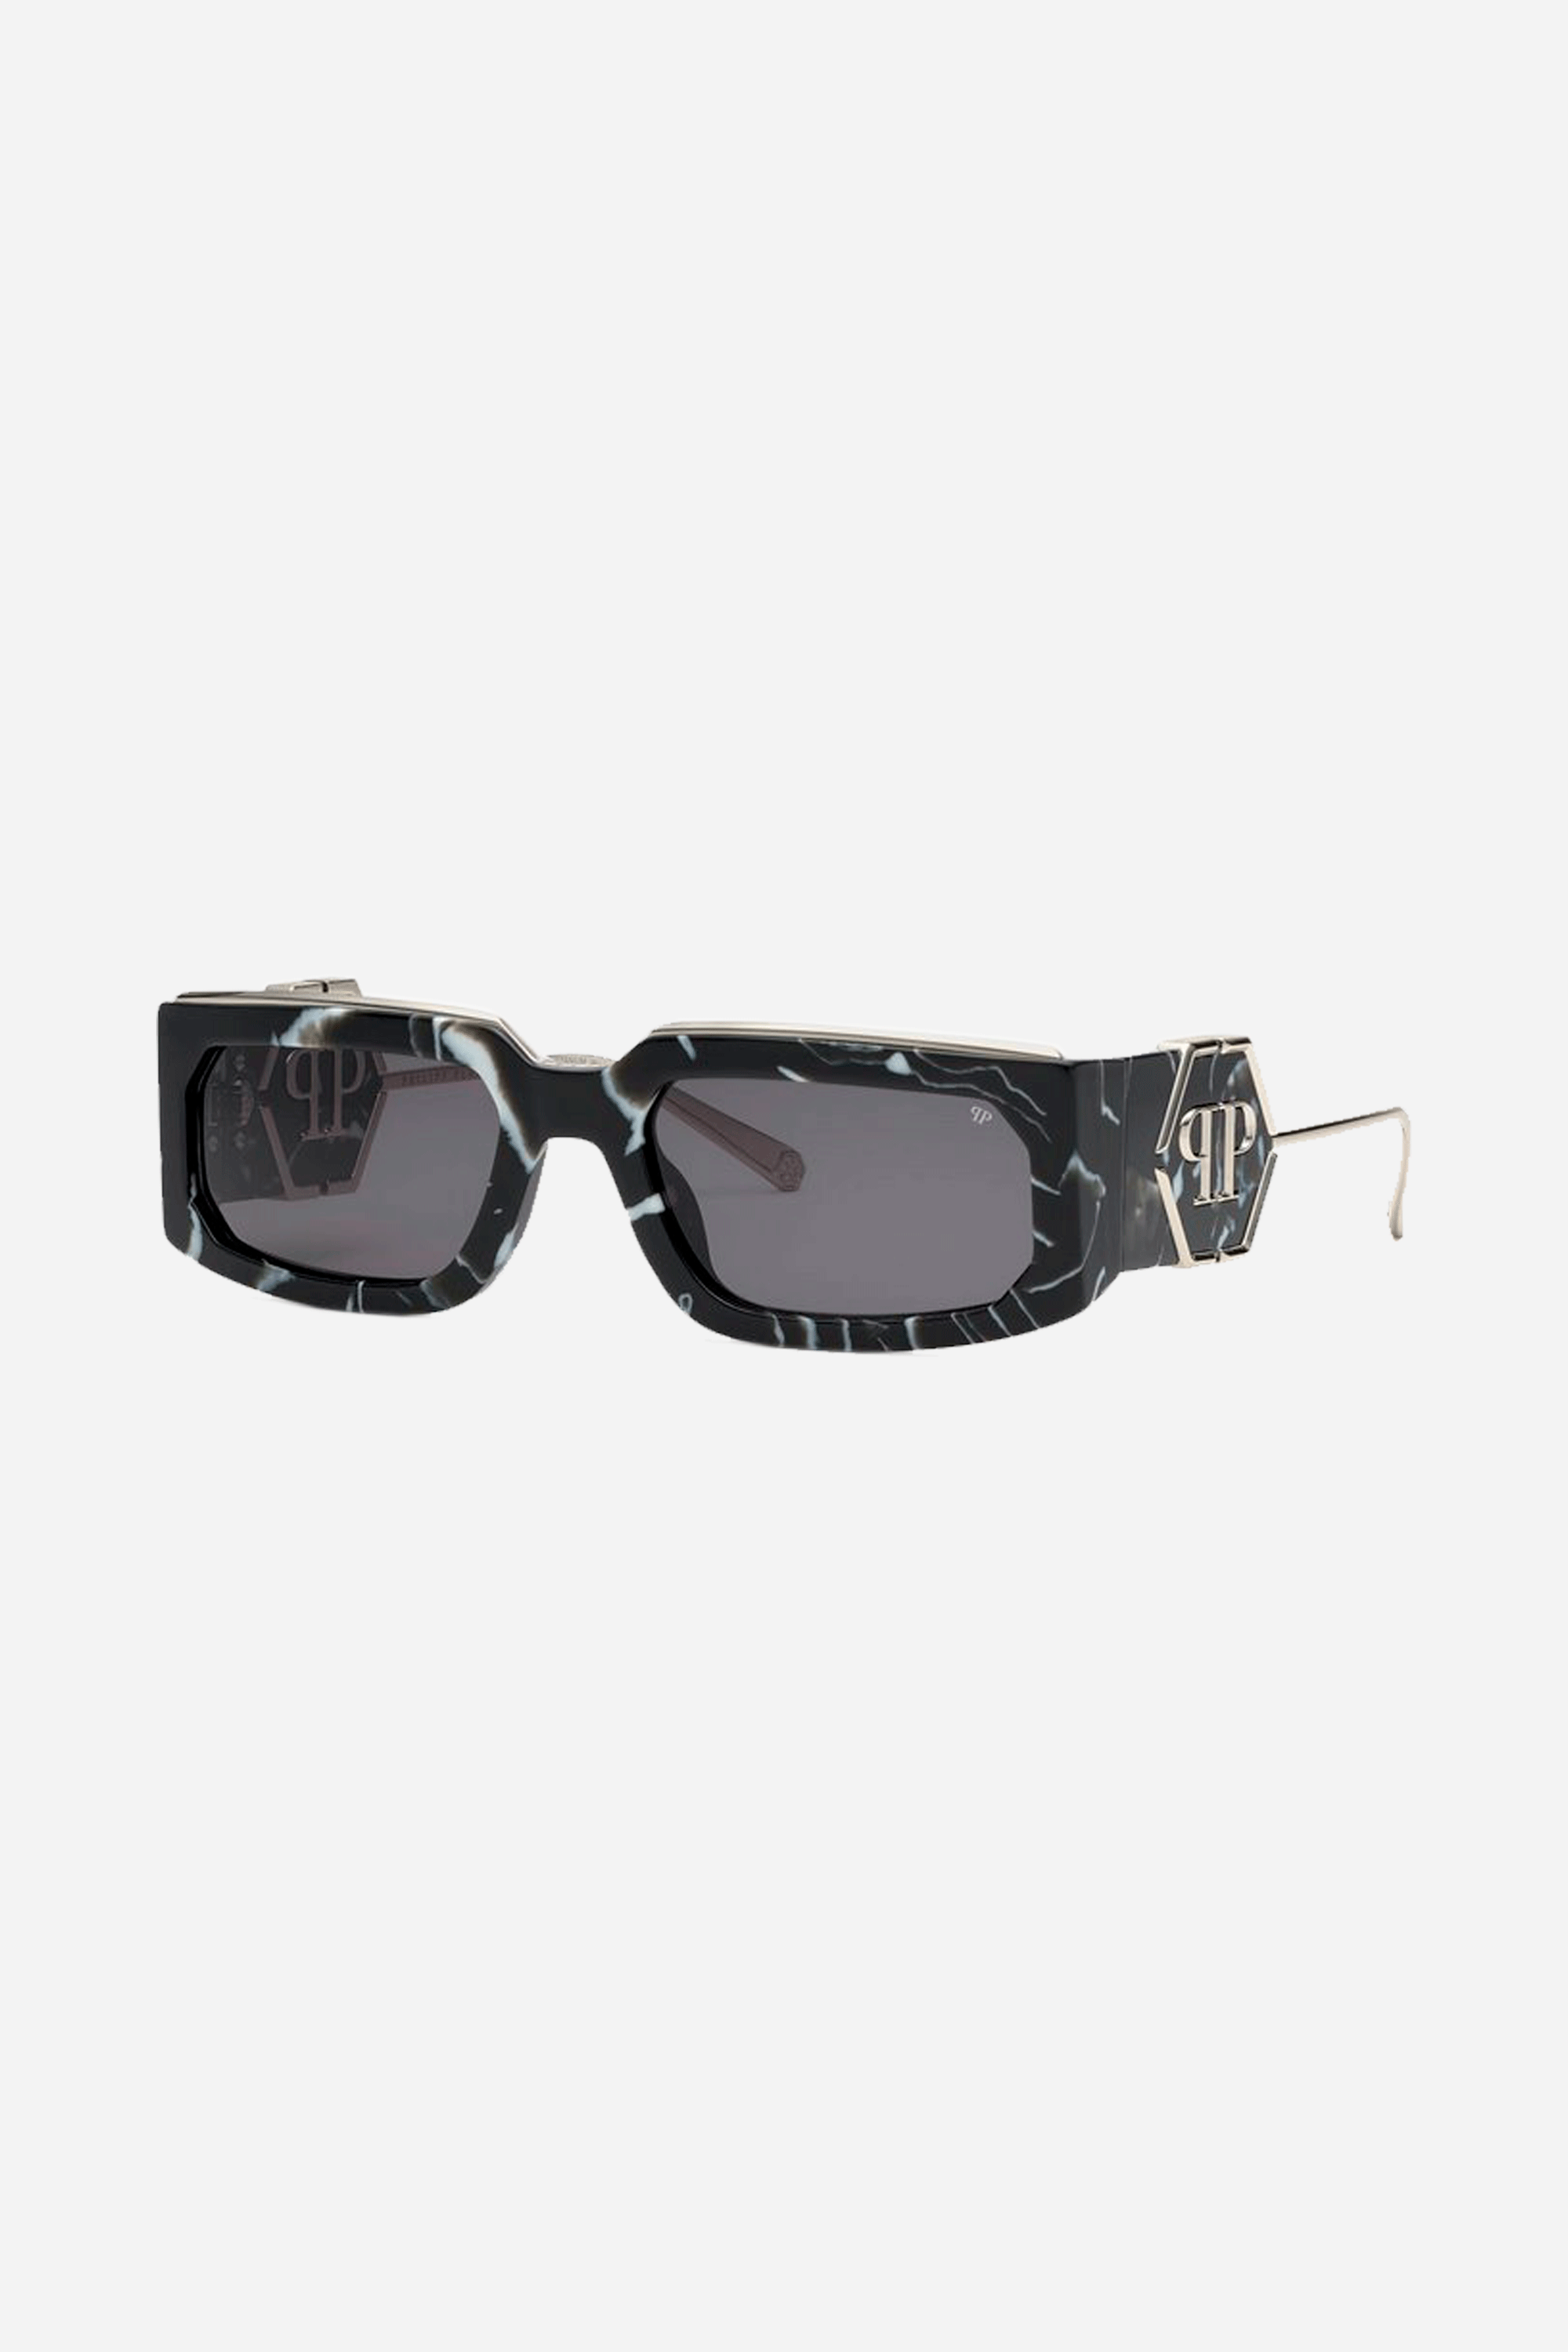 Philipp Plein rectangular black sunglasses - Eyewear Club